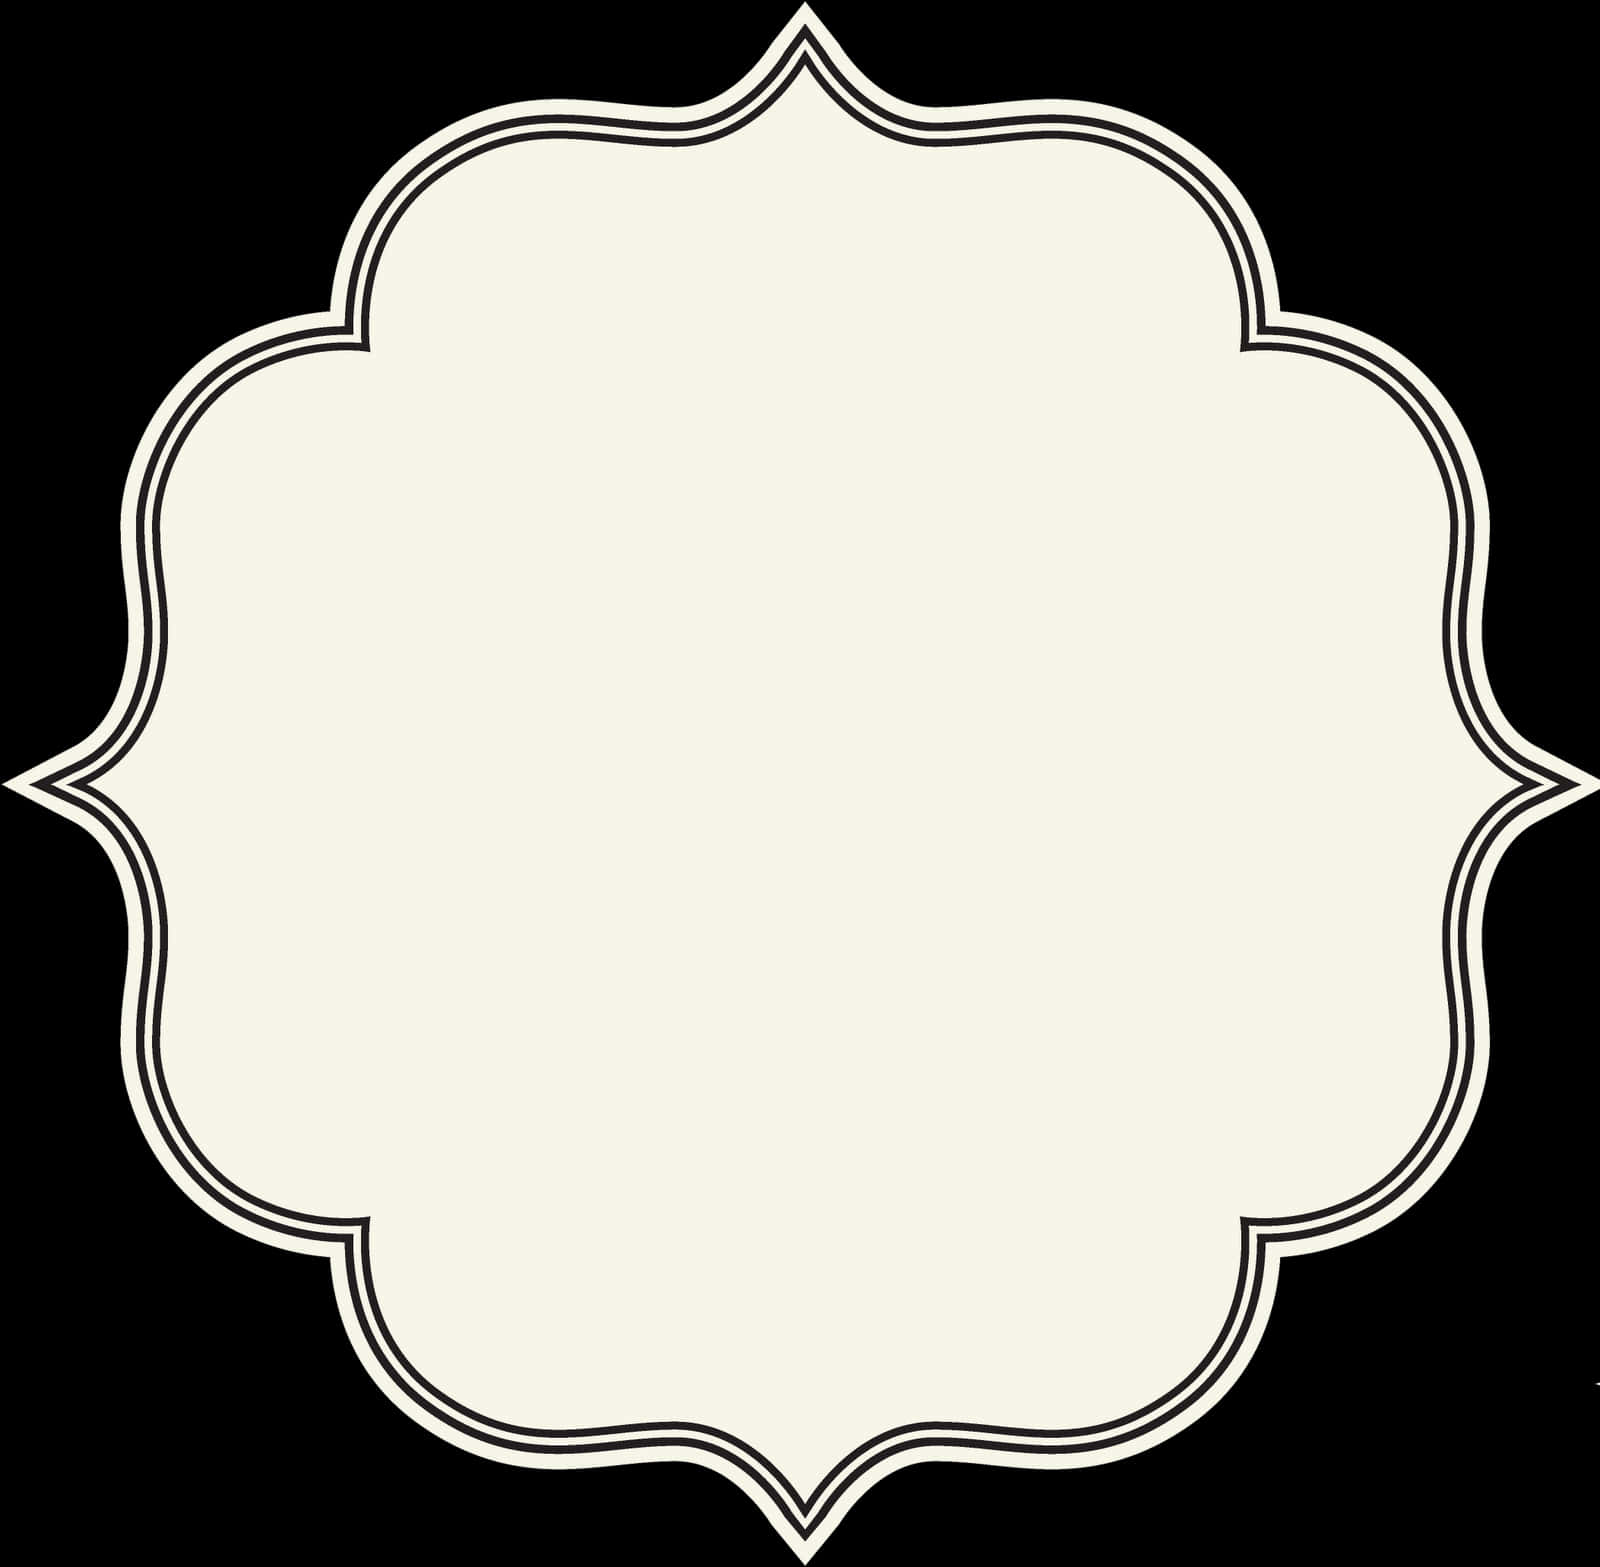 A White And Black Circular Frame